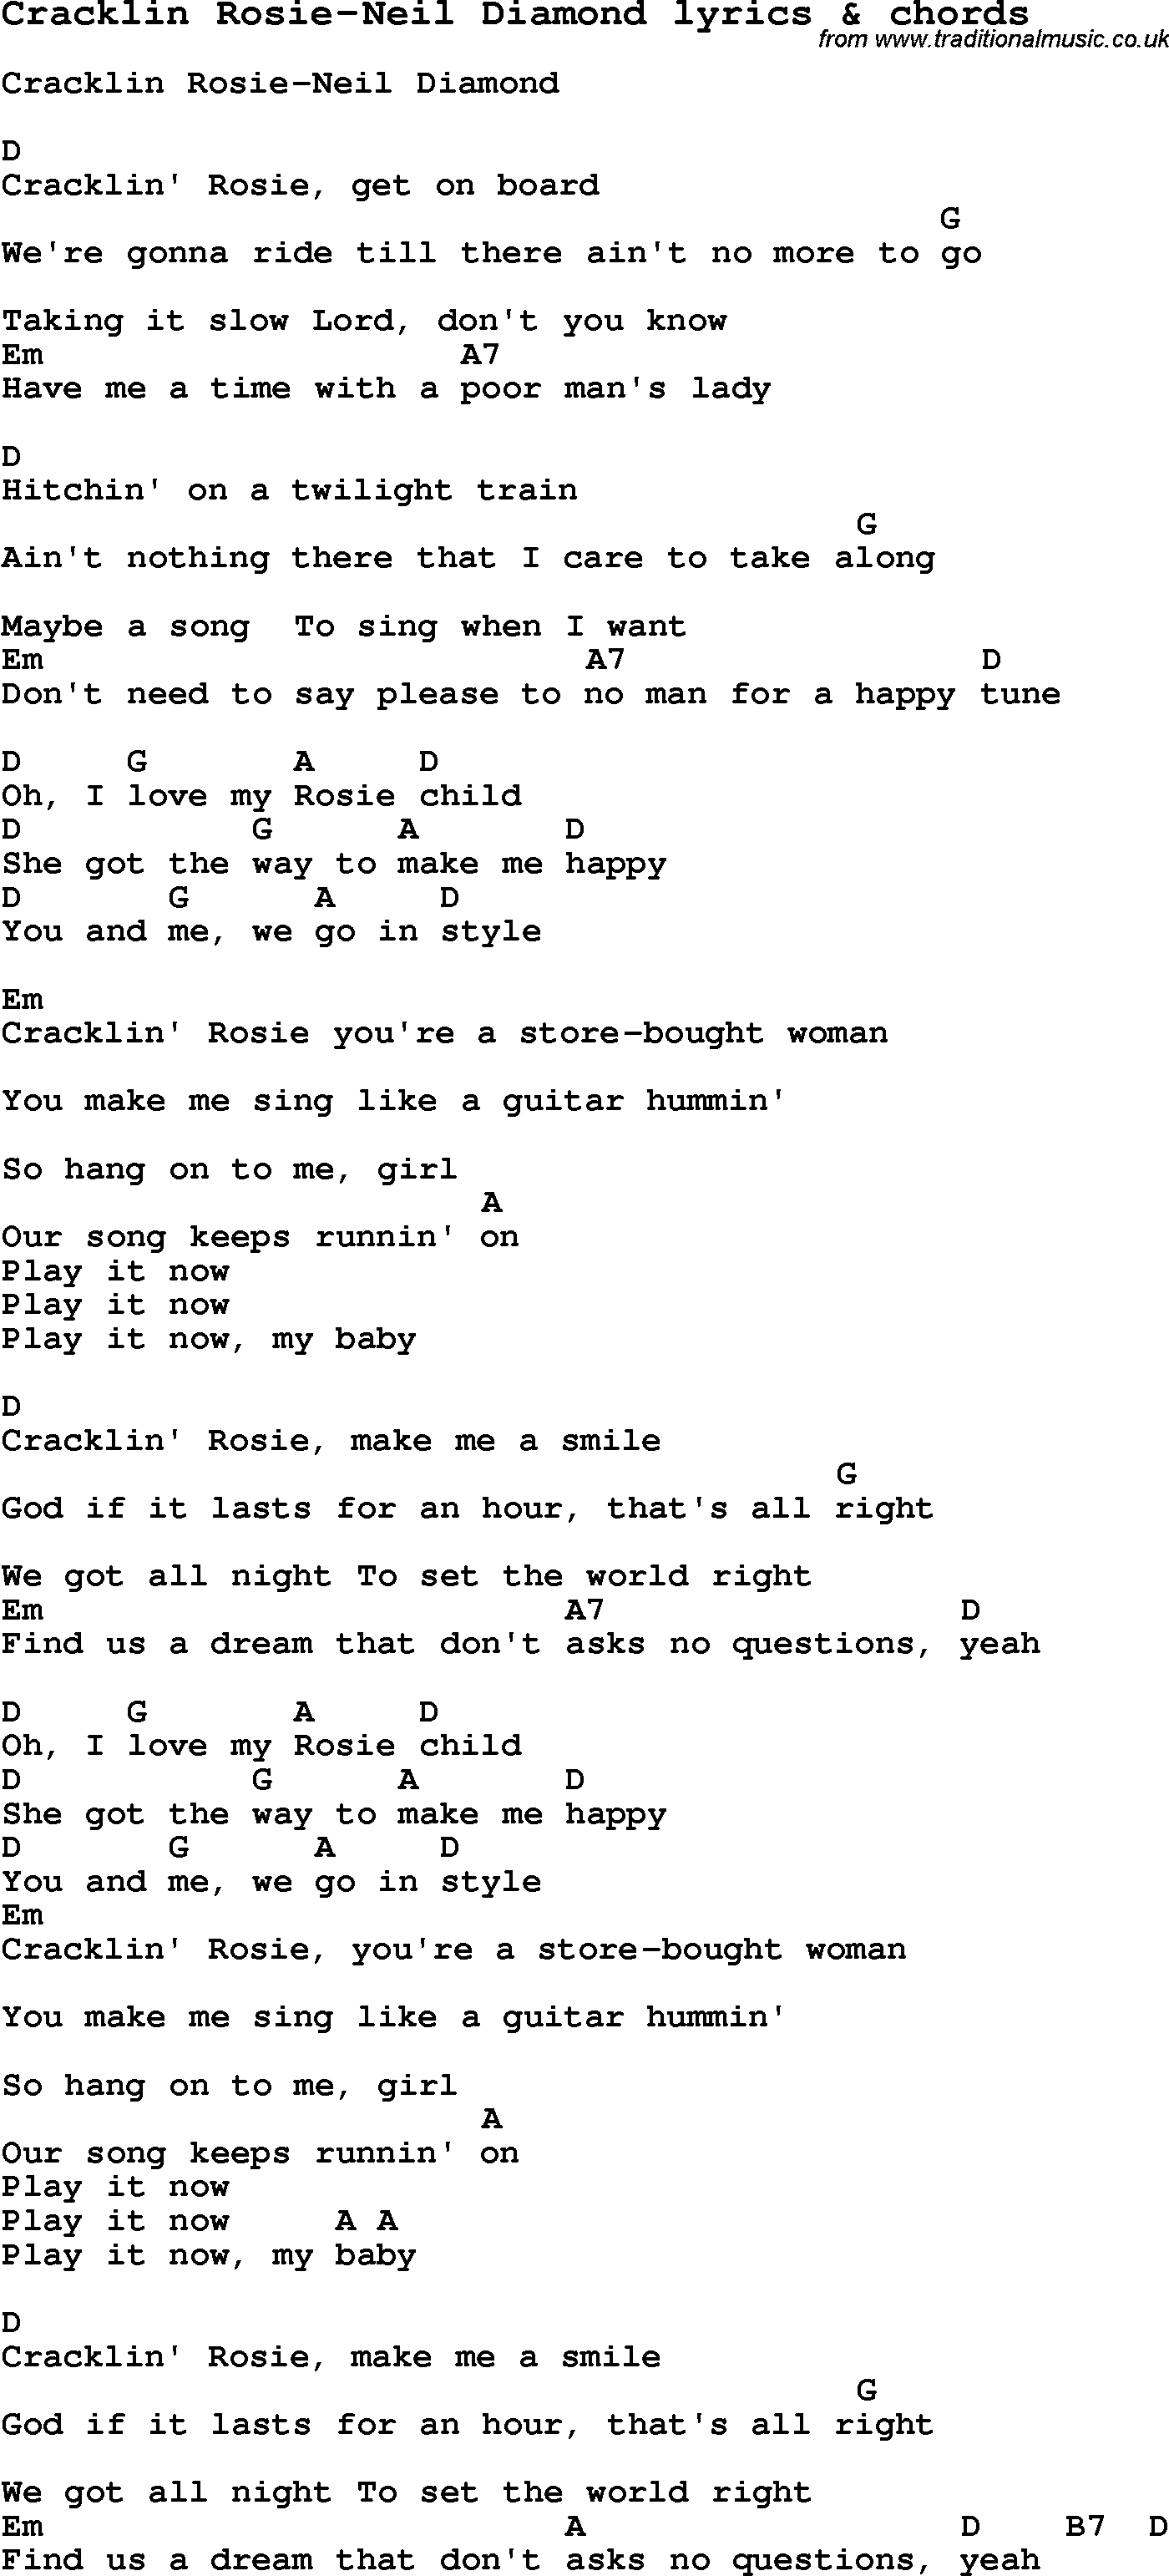 Love Song Lyrics for: Cracklin Rosie-Neil Diamond with chords for Ukulele, Guitar Banjo etc.